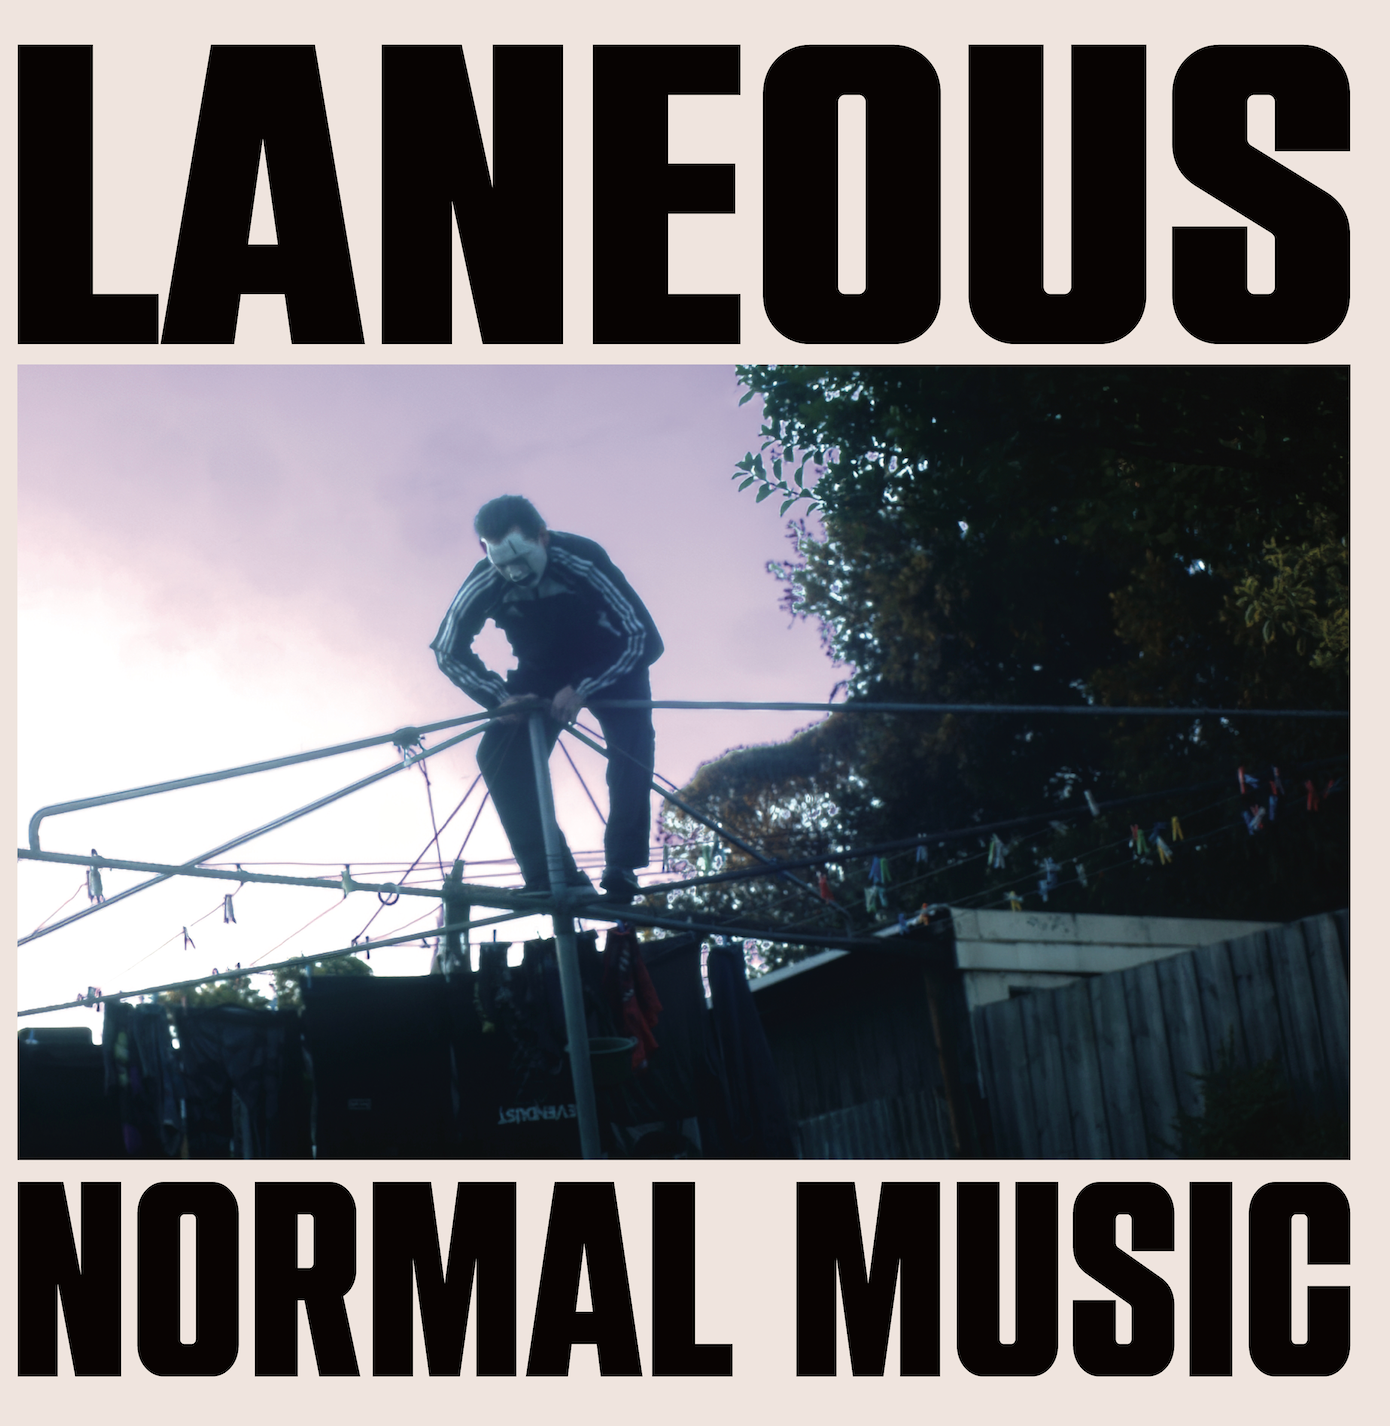 Laneous - Normal Music - Vinyl EP